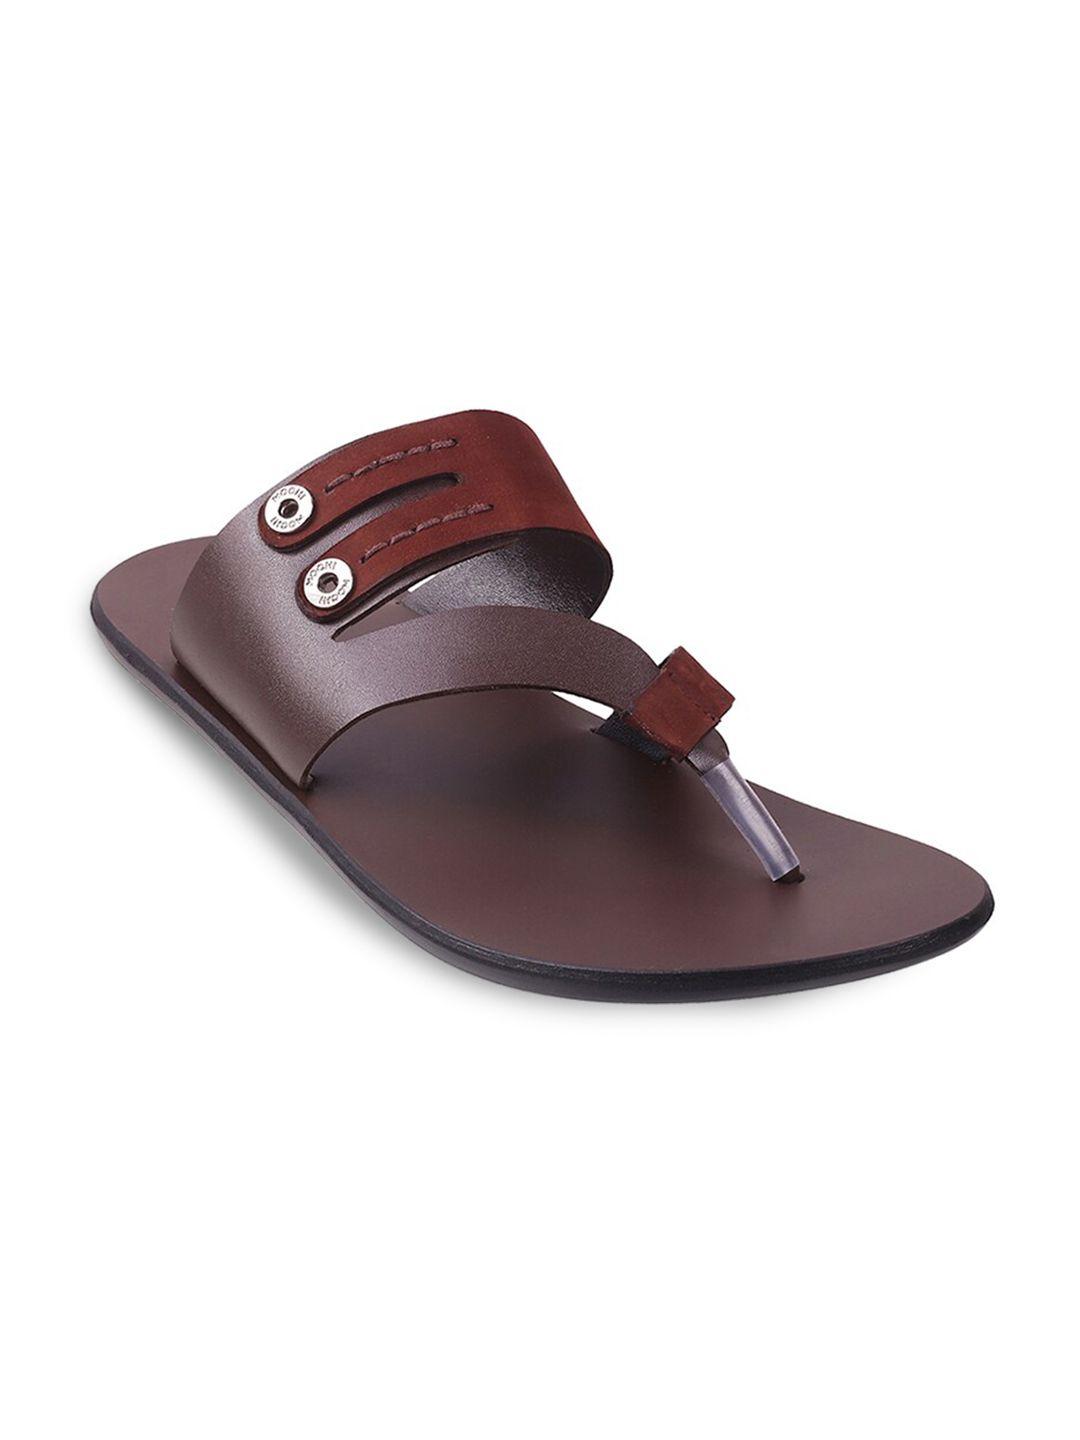 mochi men brown & maroon leather comfort slip on sandals